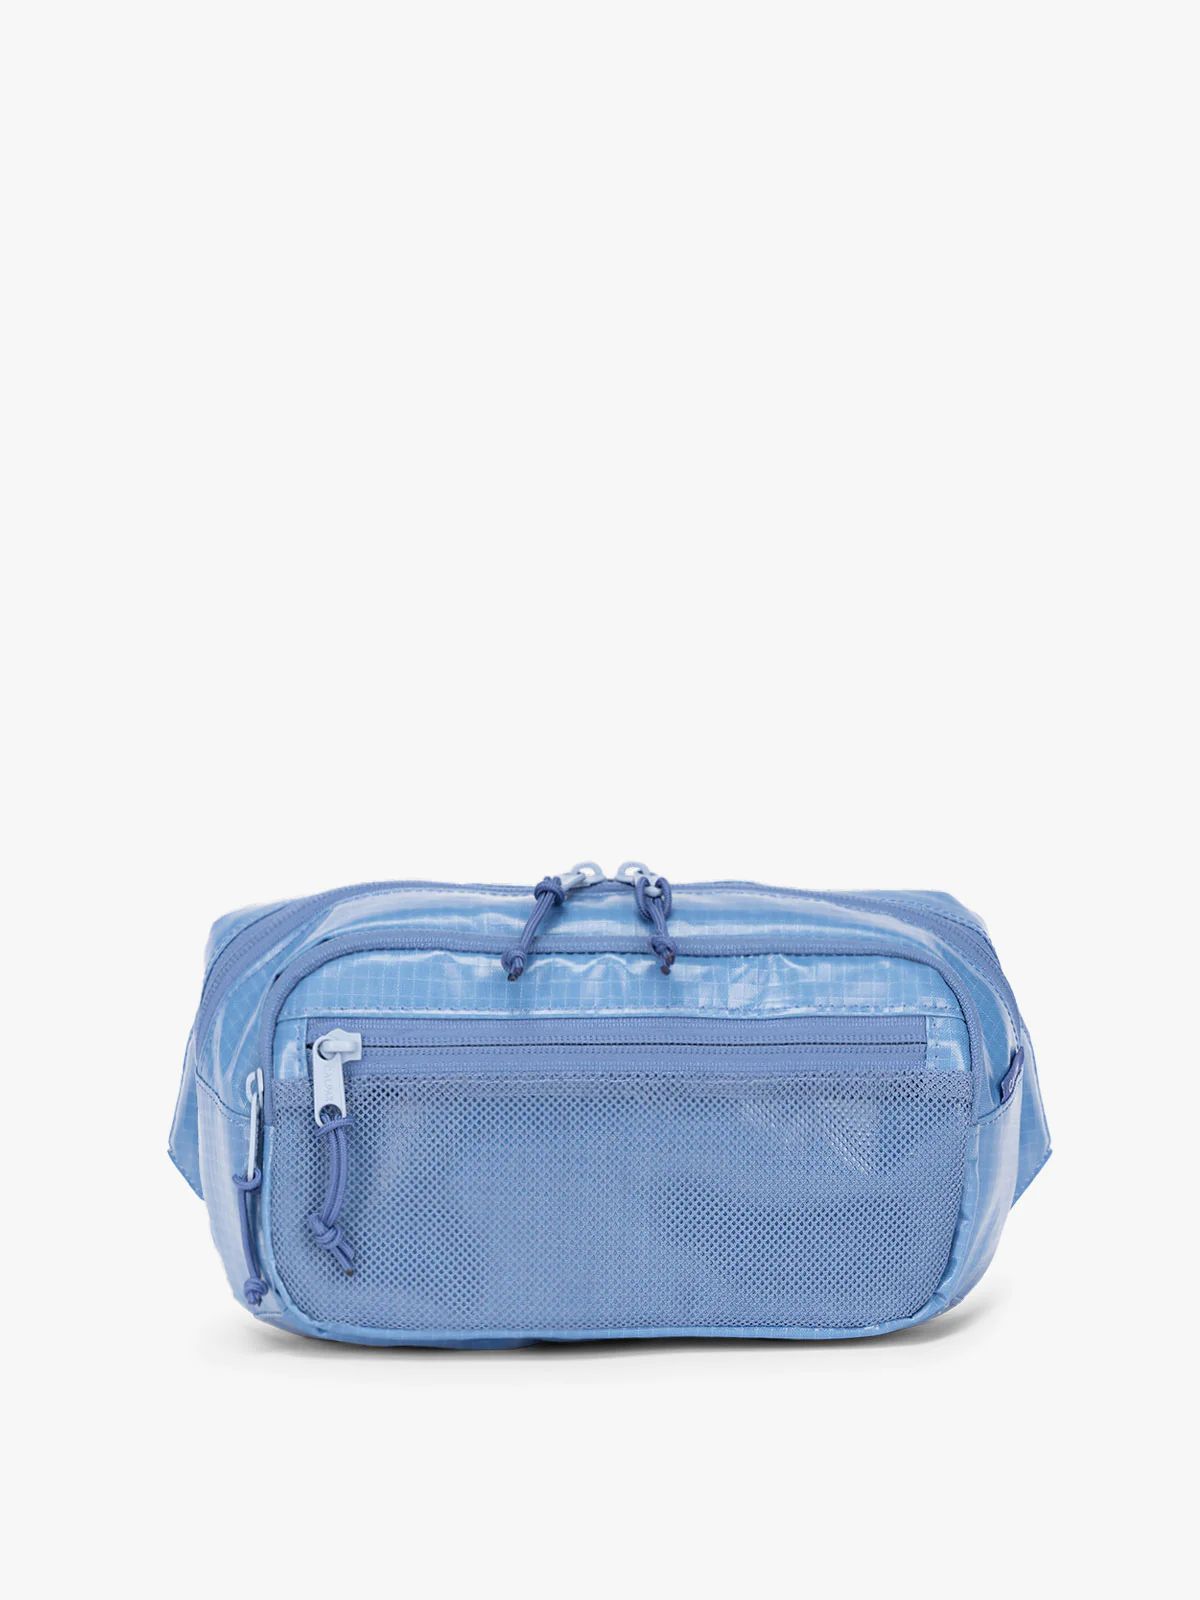 Terra Small Sling Bag | CALPAK | CALPAK Travel